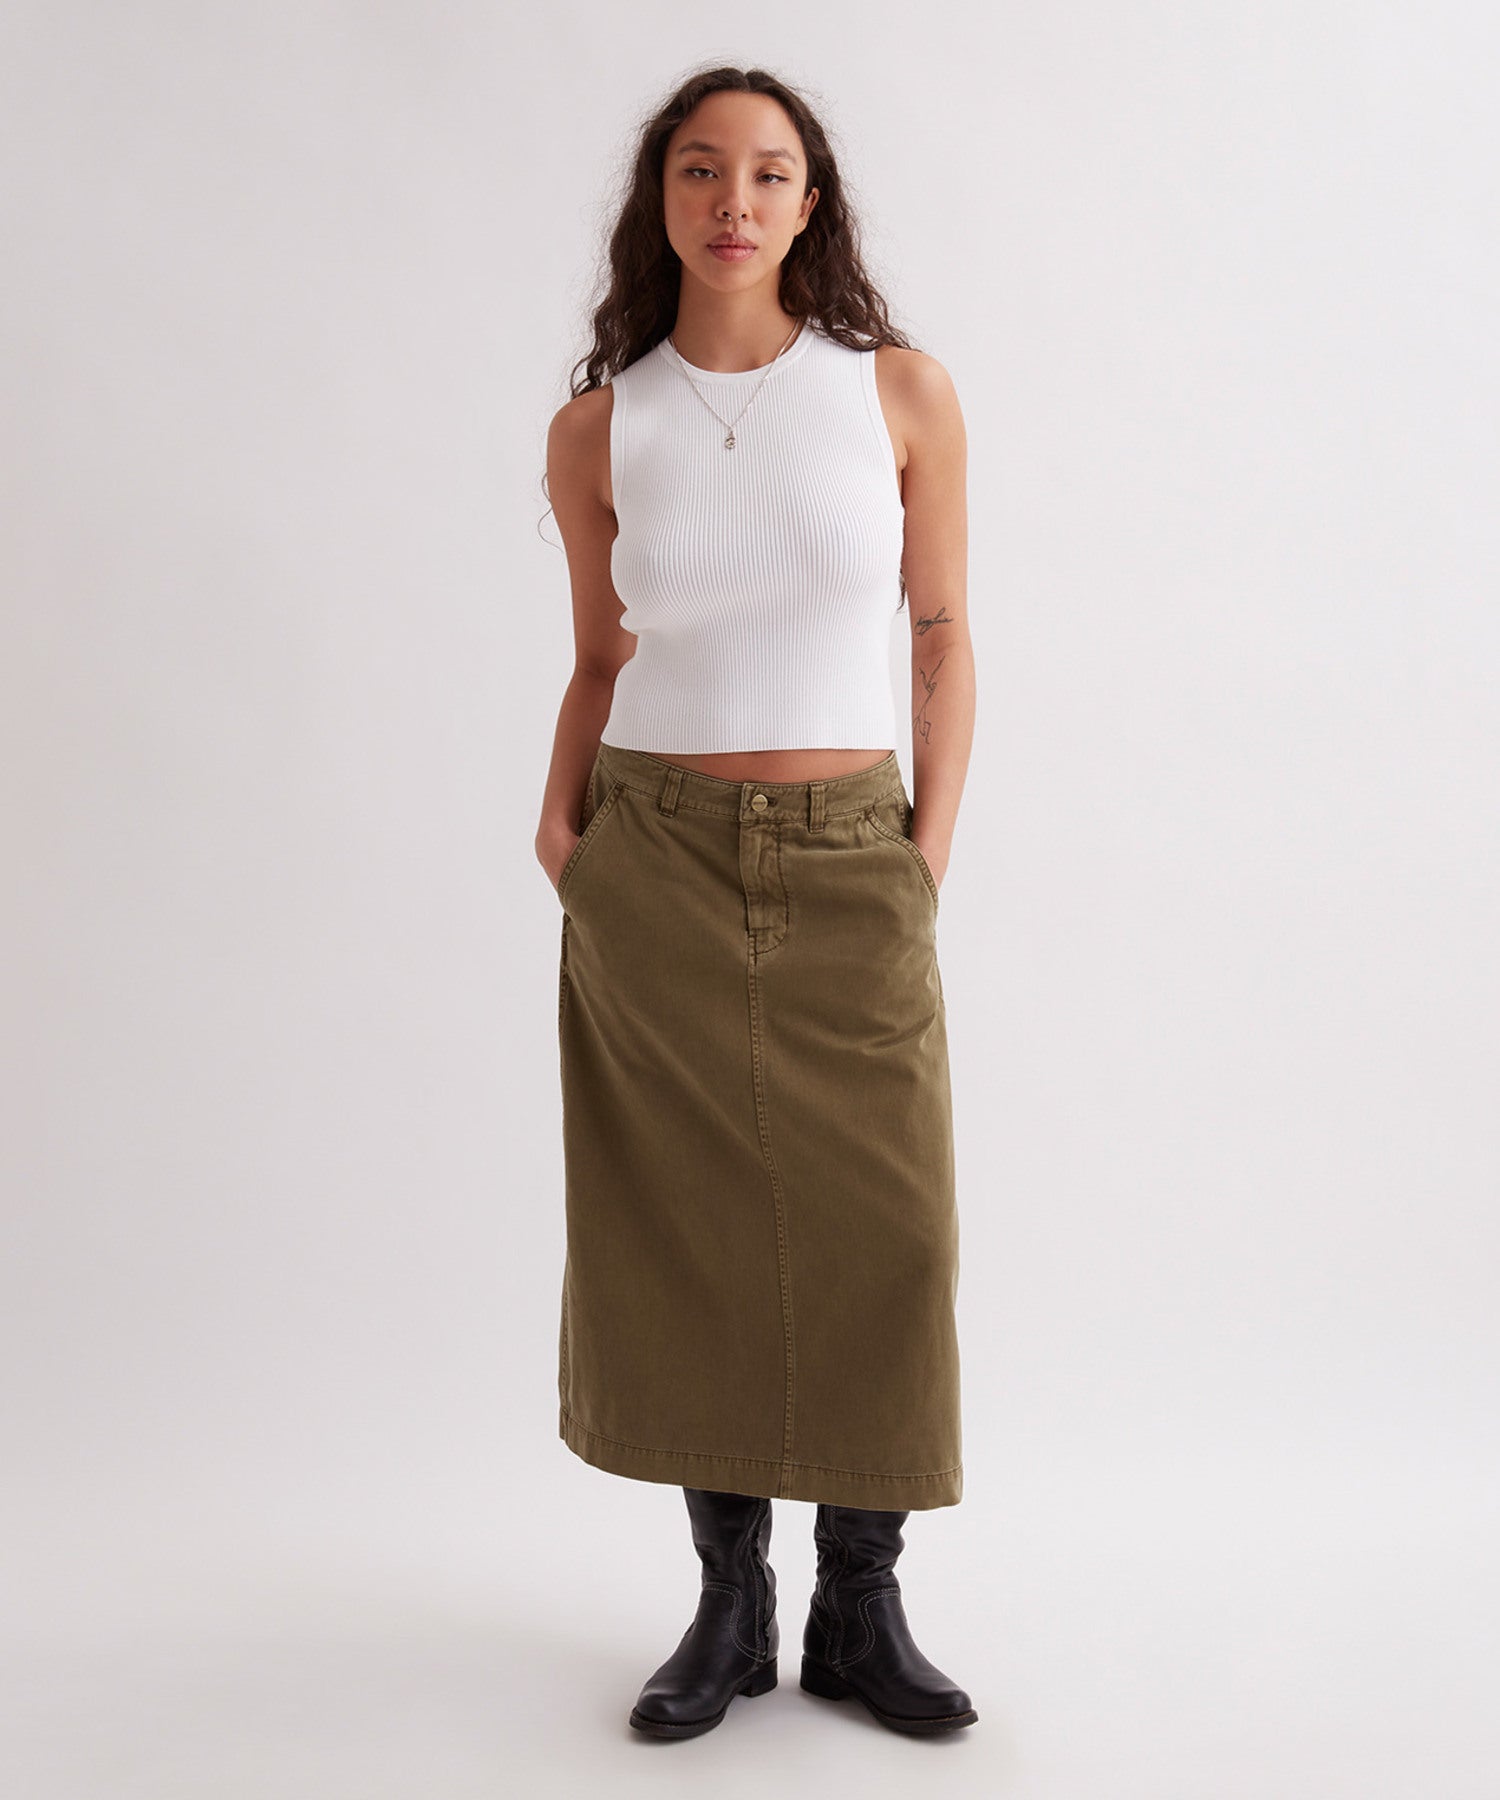 Tiffany Midi Skirt | Saturdays NYC Japan